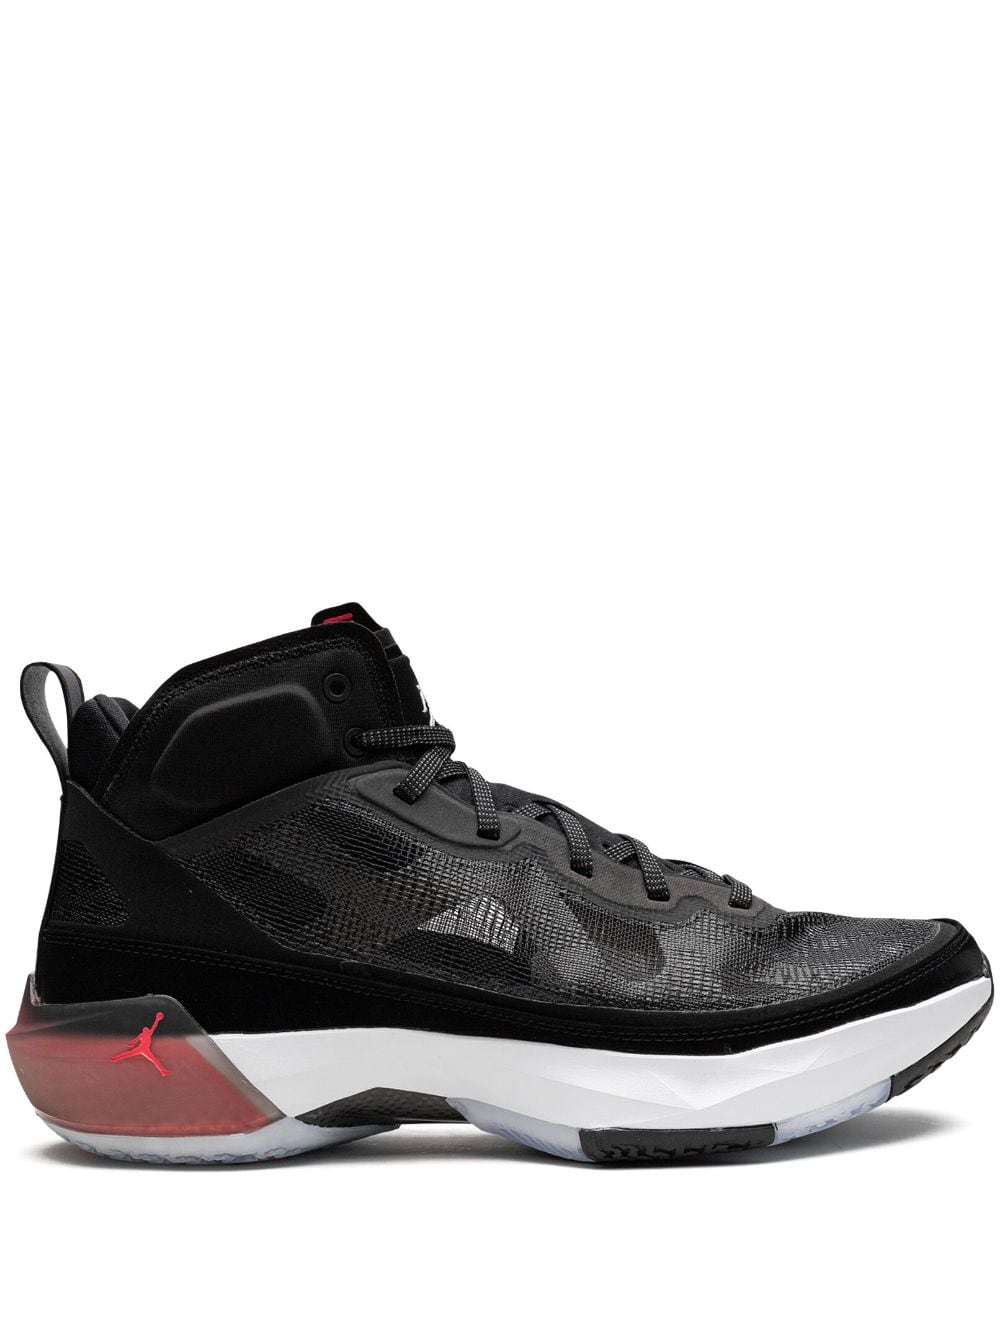 Jordan Air Jordan 37 Black Hot Punch Sneakers - Schwarz von Jordan